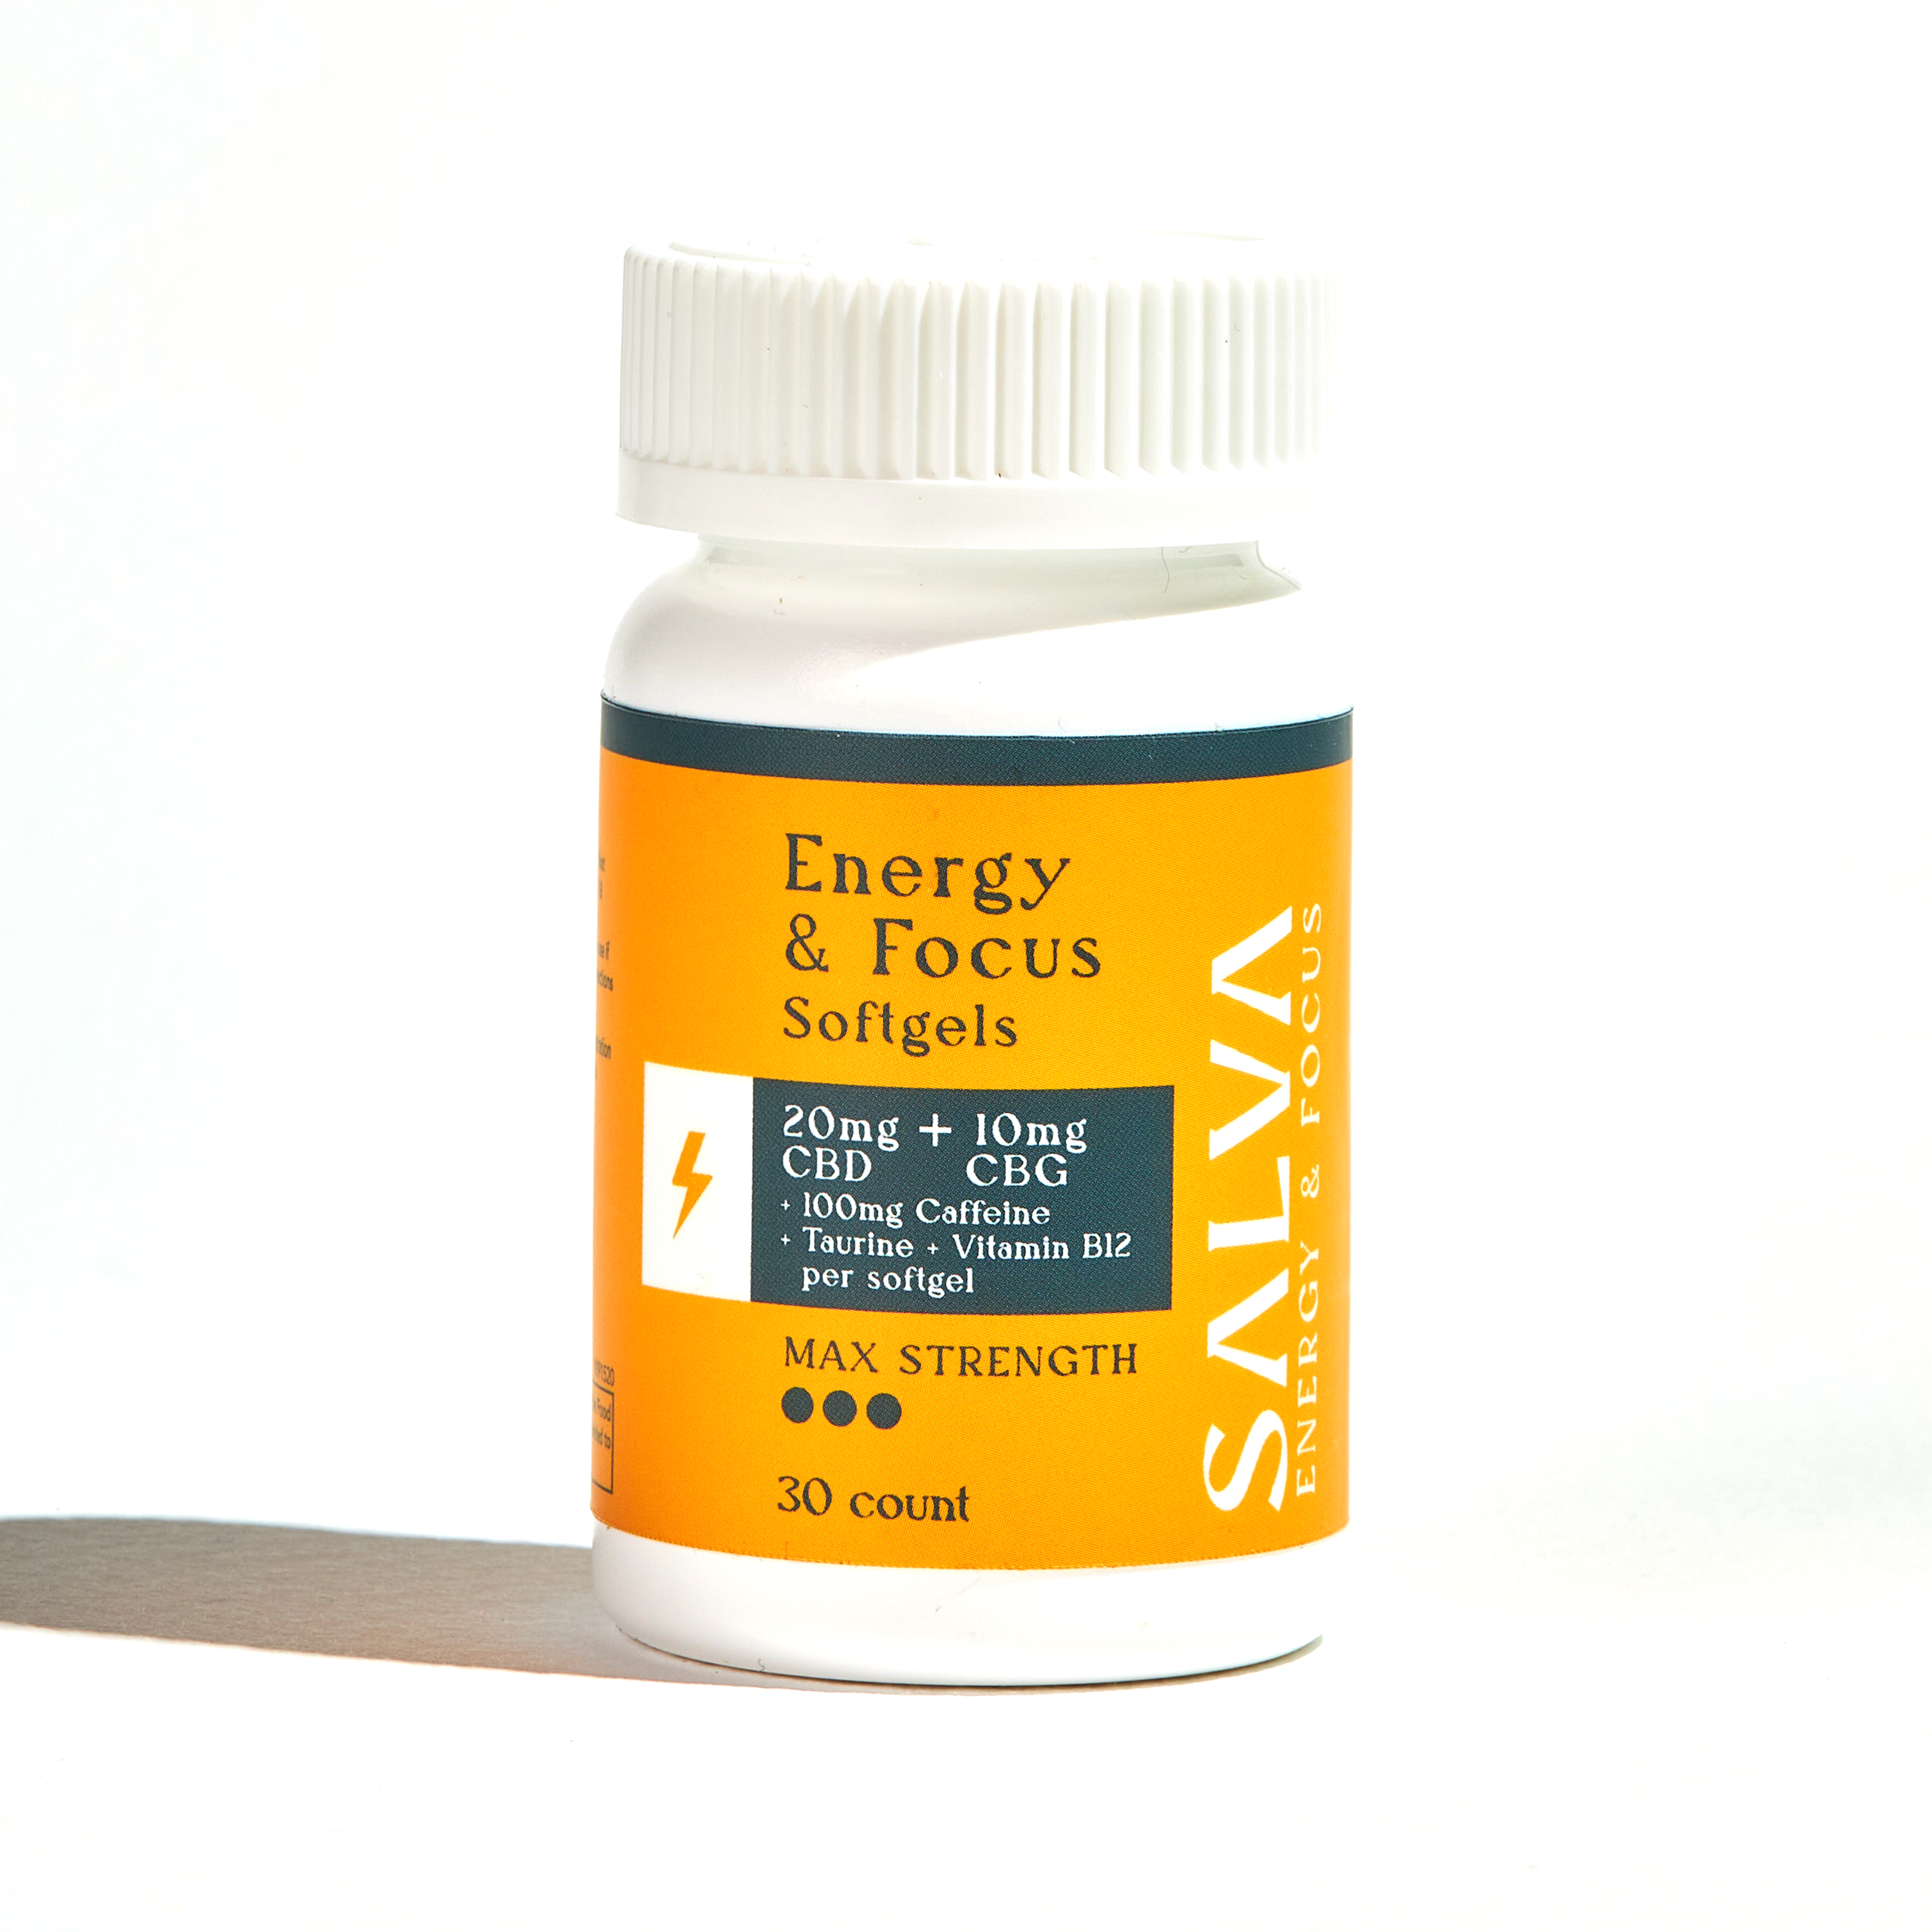 SALVA Energy & Focus Softgels: 20mg CBD + 10mg CBG + 100mg Caffeine + Taurine + Vitamin B12 (30 count)